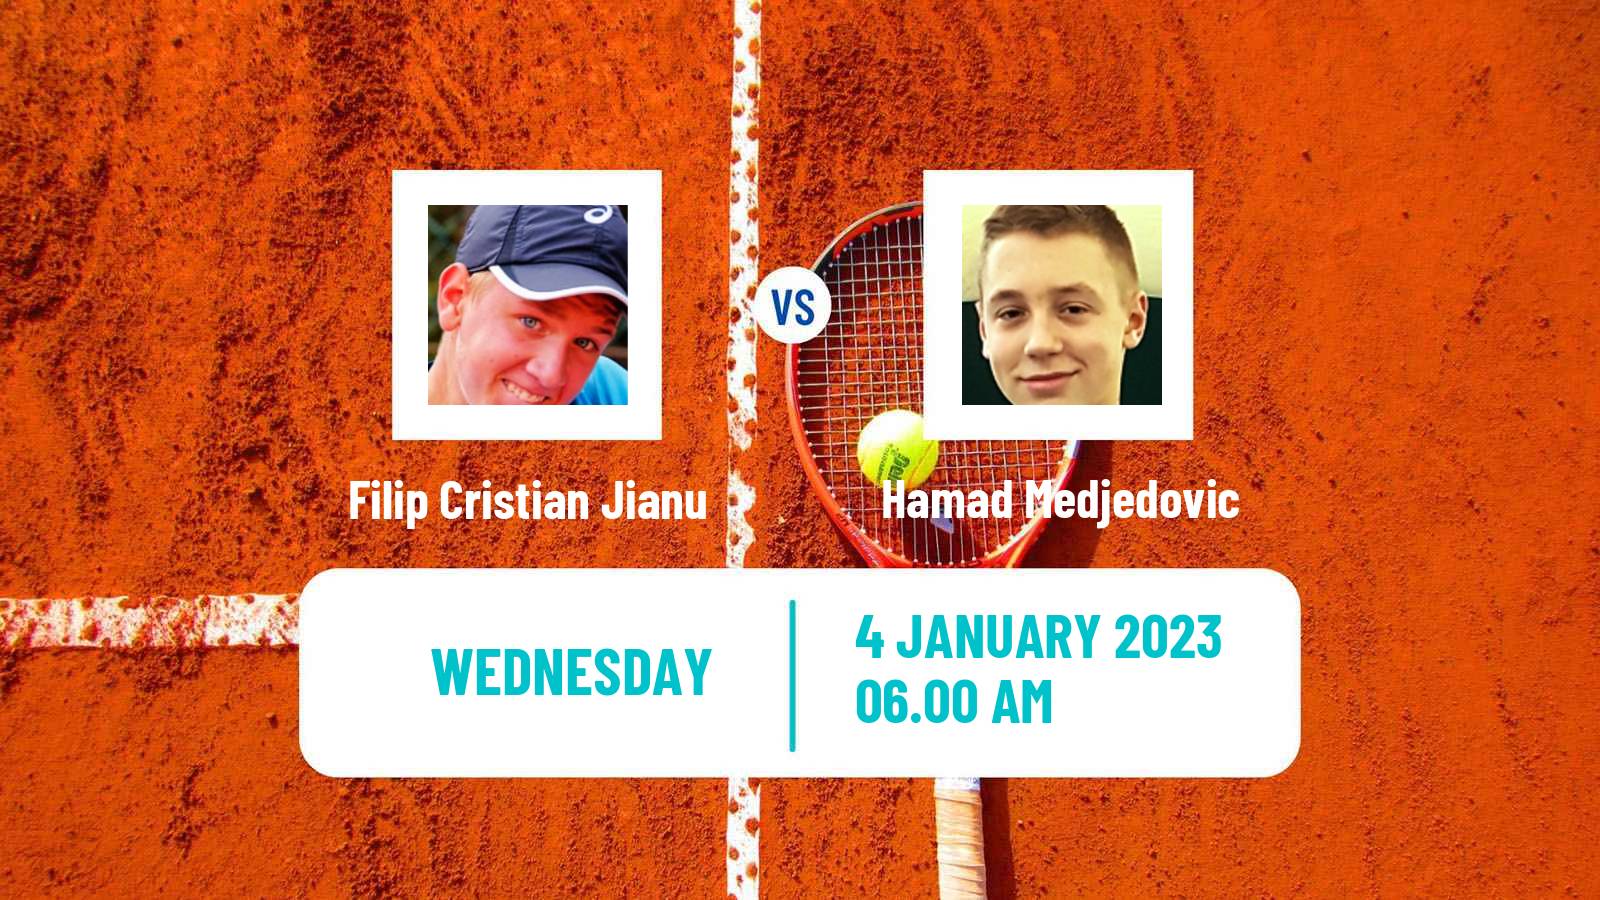 Tennis ATP Challenger Filip Cristian Jianu - Hamad Medjedovic